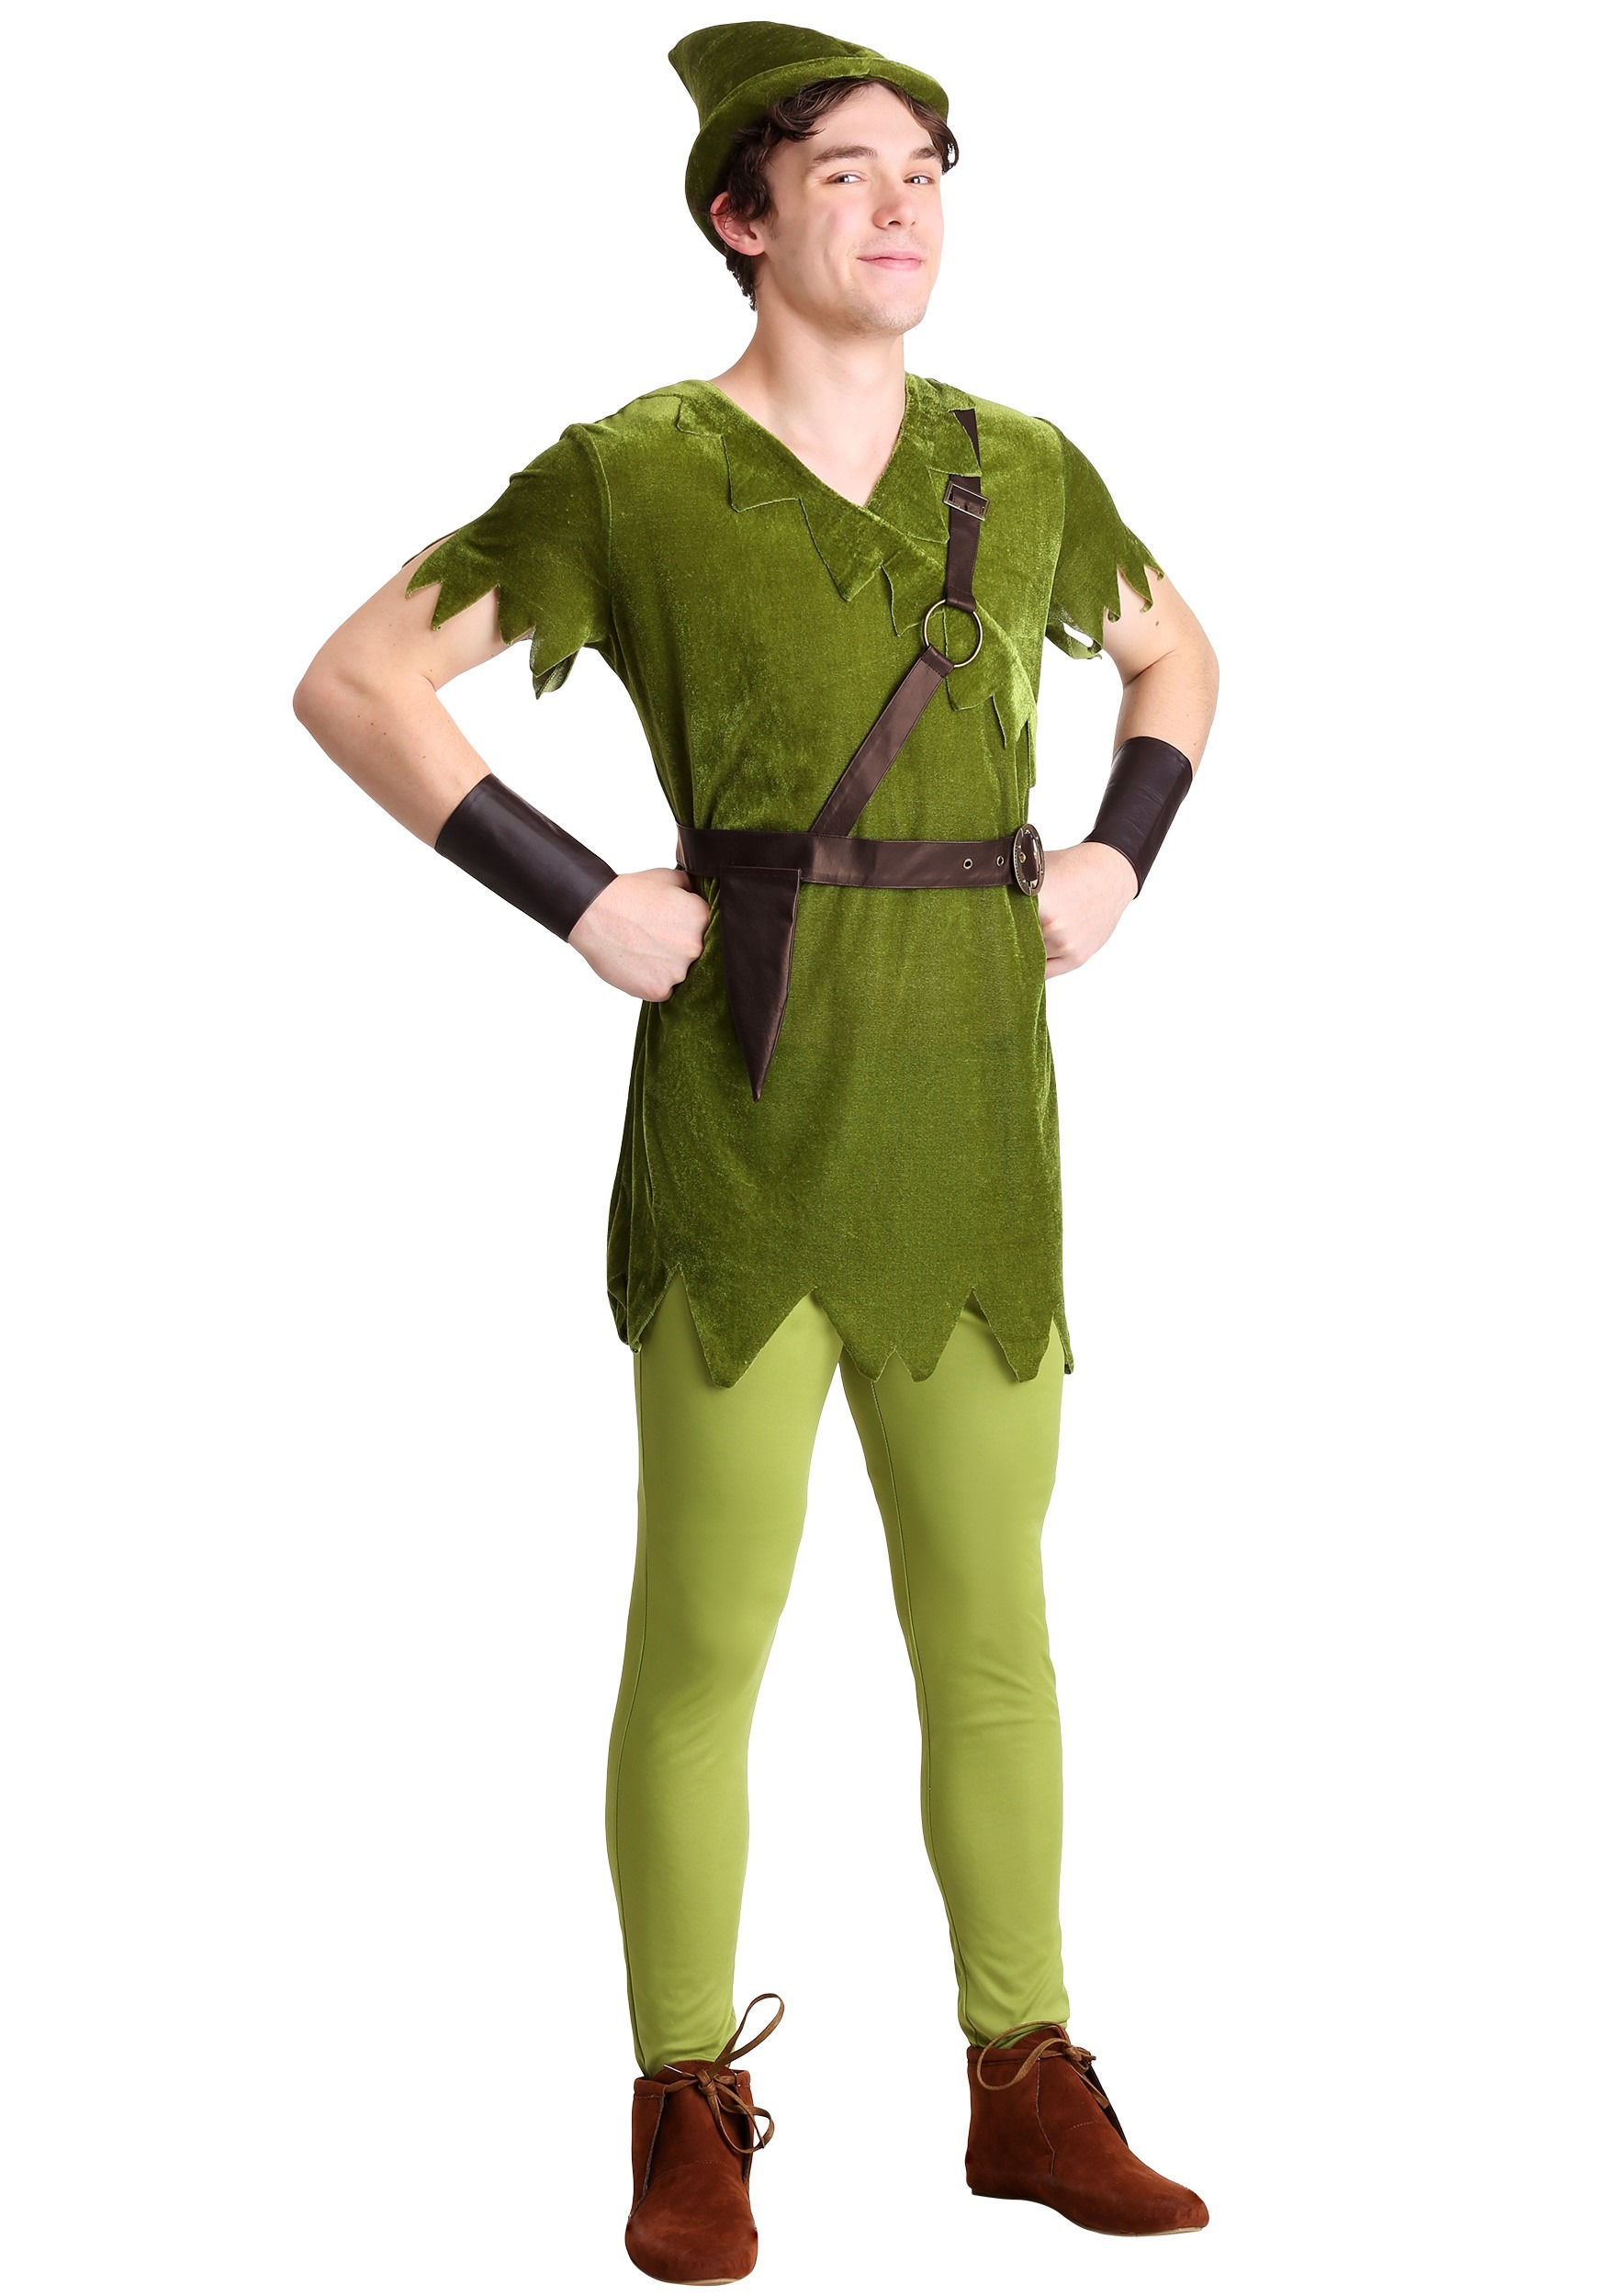 Classic Plus Size Peter Pan Costume for Men